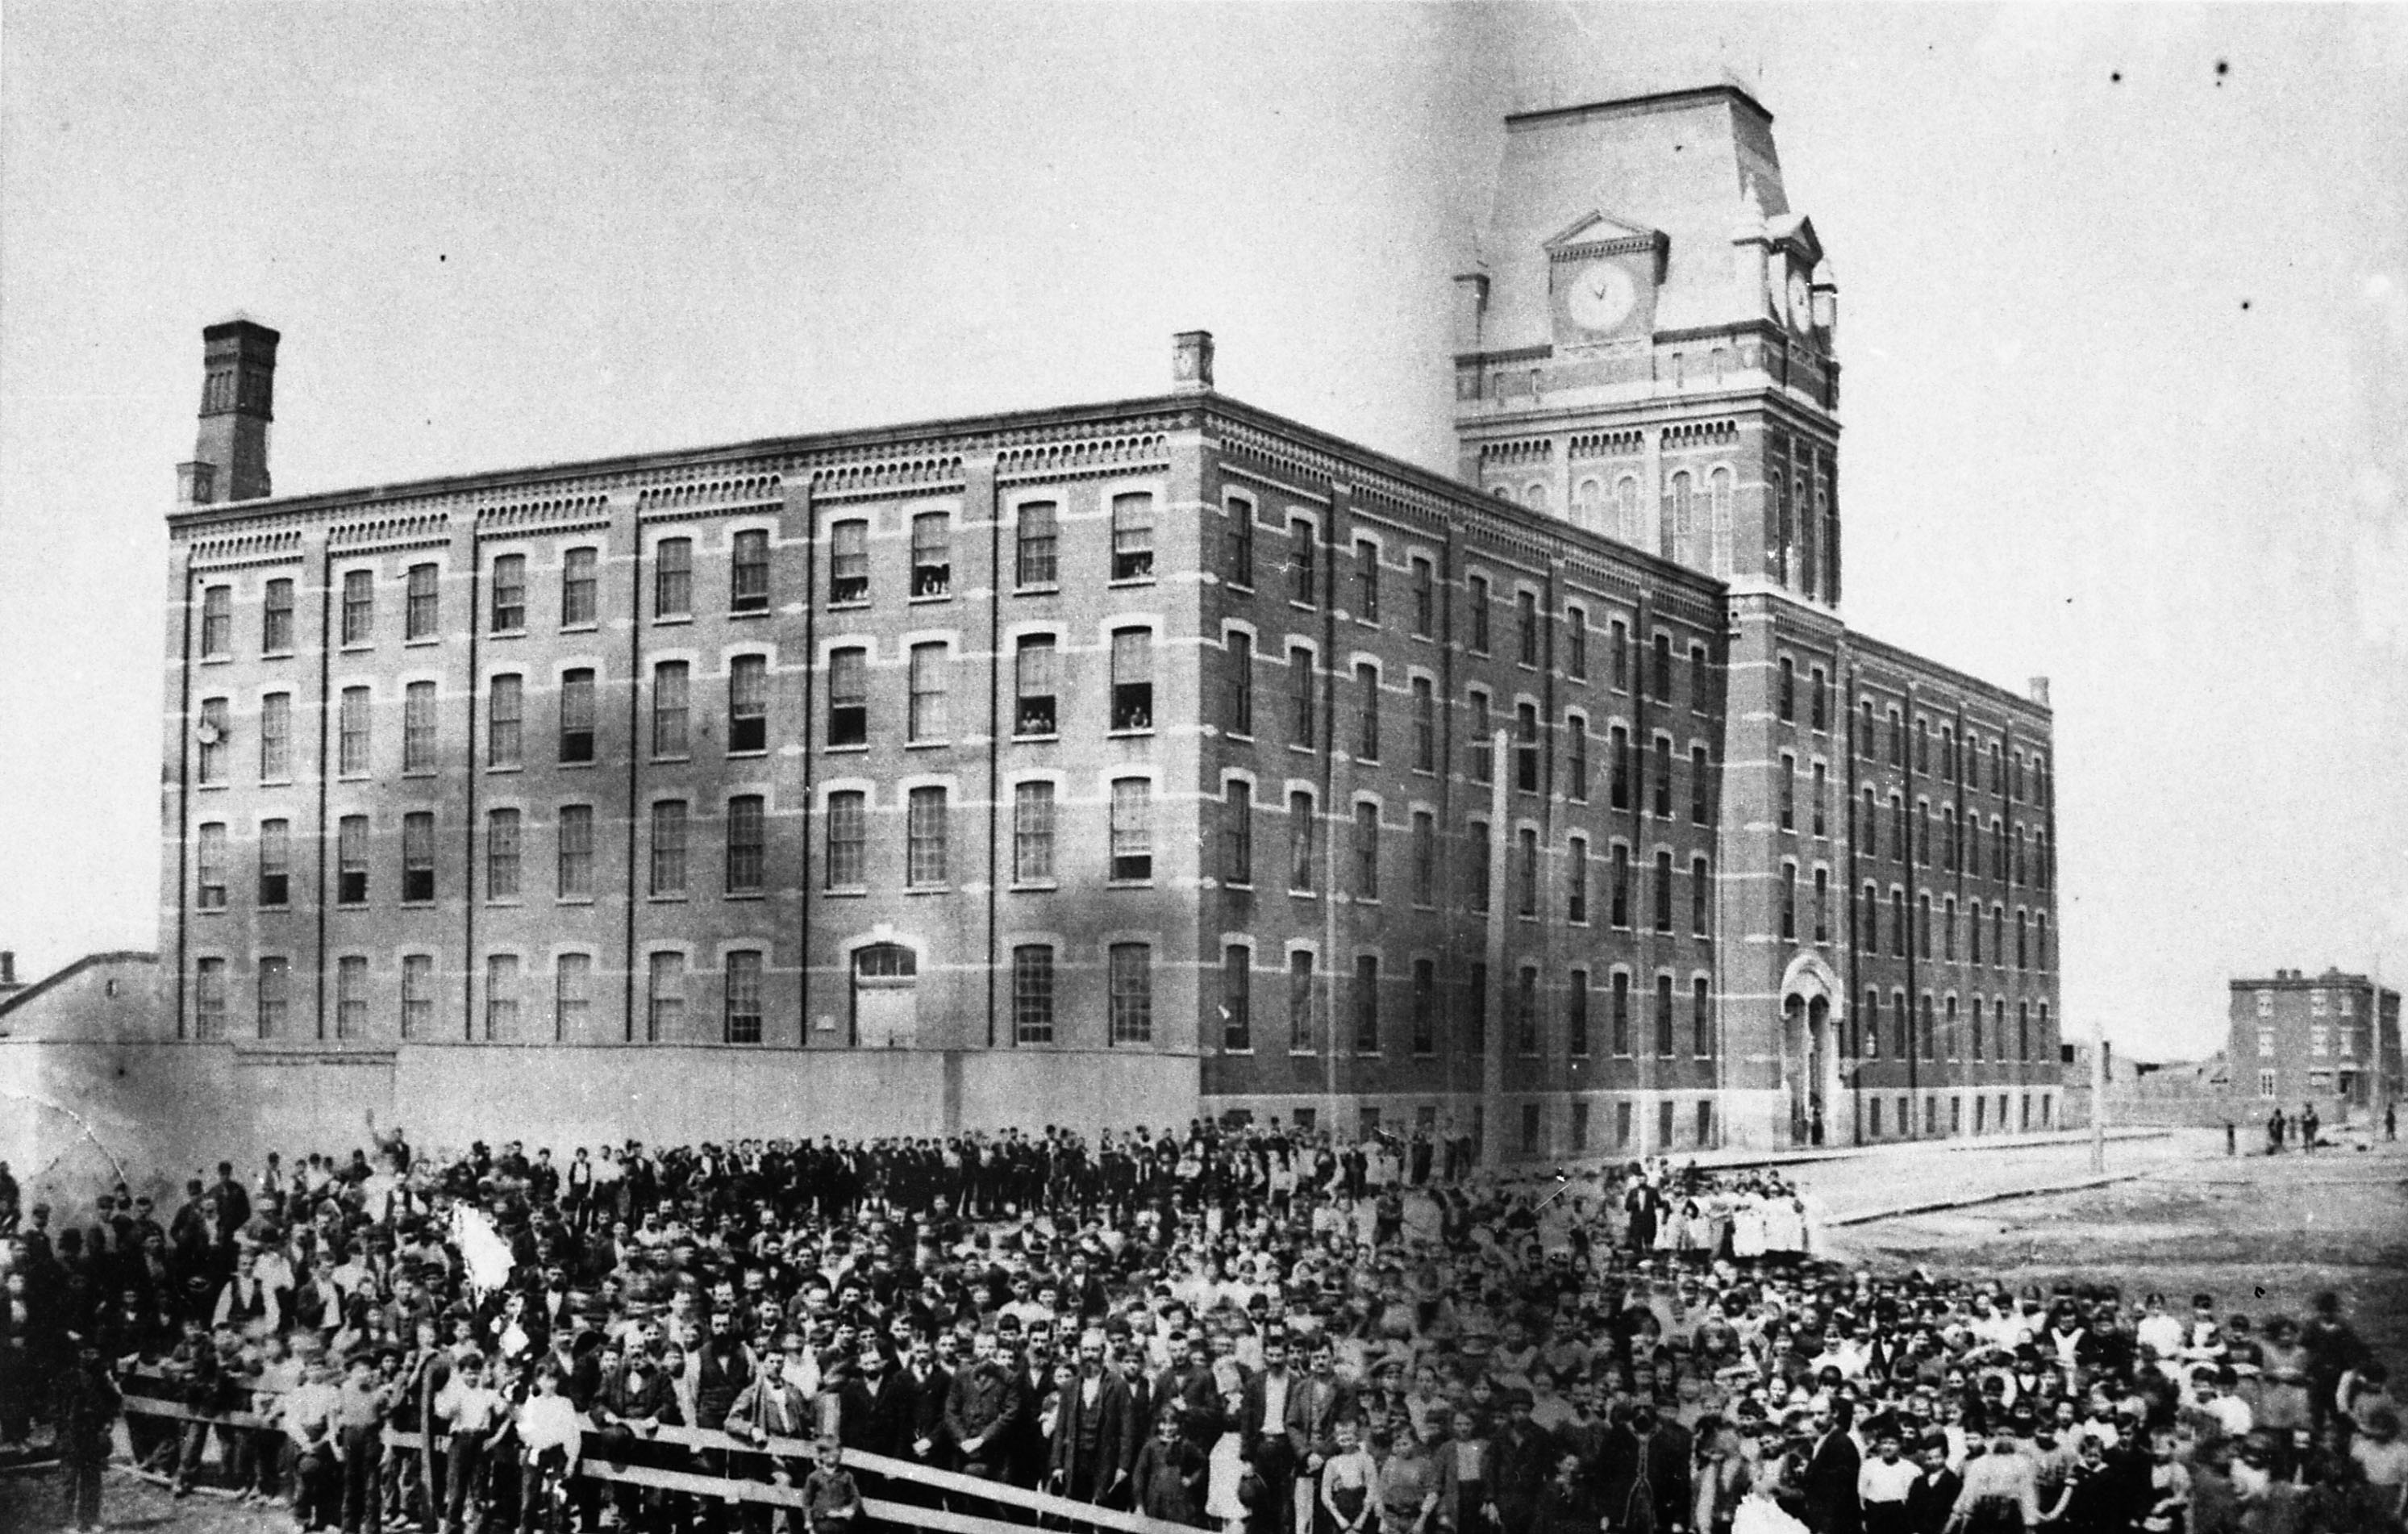 Des employés de la manufacture Macdonald Tobacco pose devant l'édifice en 1877